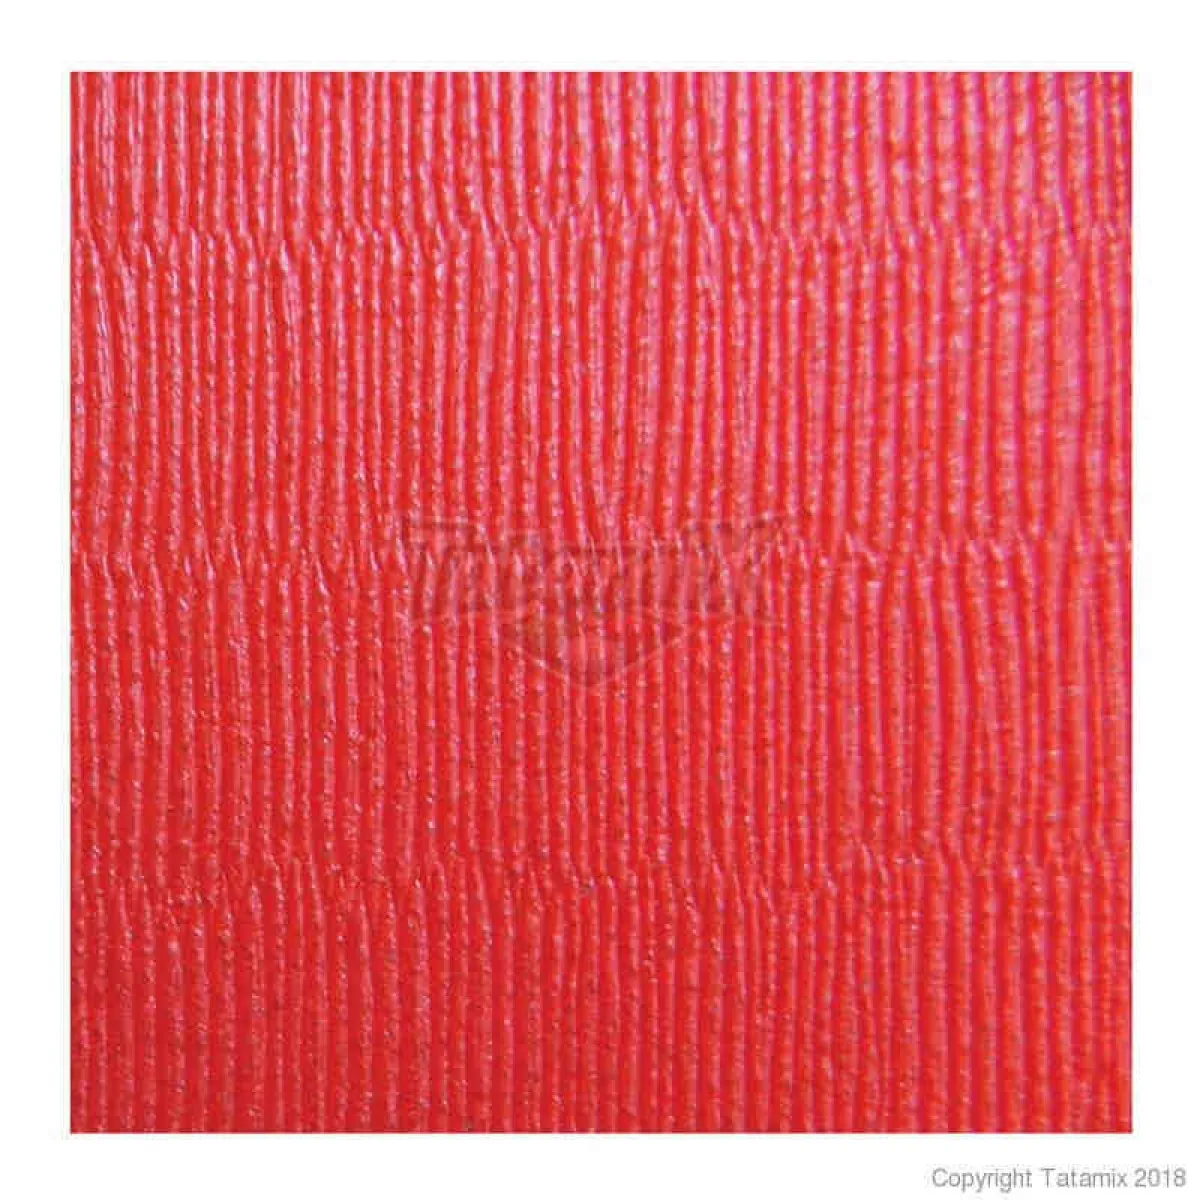 Tatami J30L mat black/white/red 100 cm x 100 cm x 3 cm